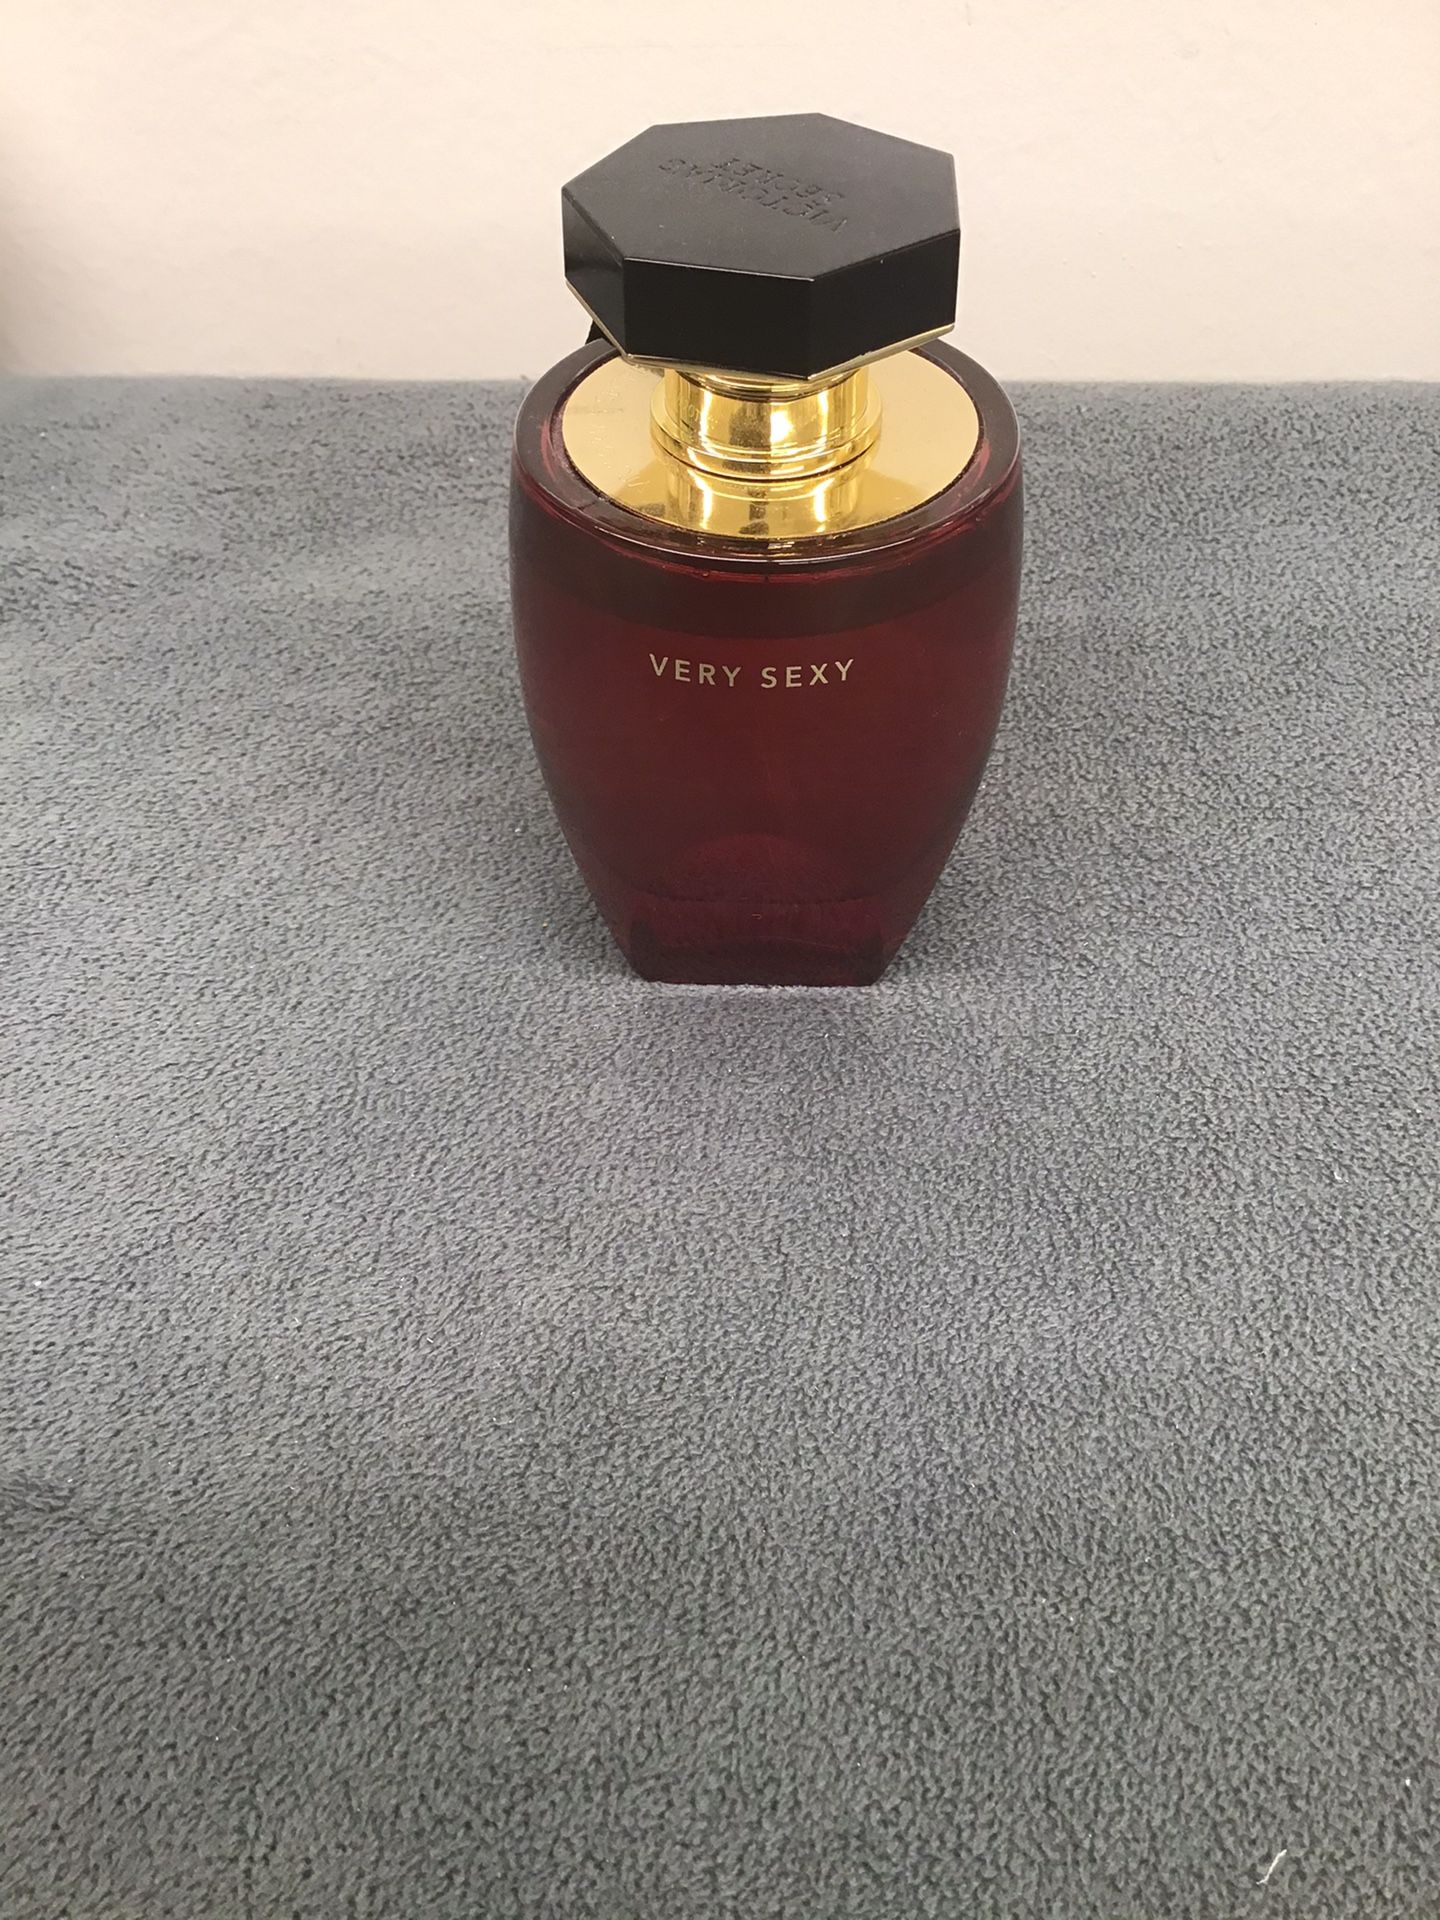 VS very sexy perfume